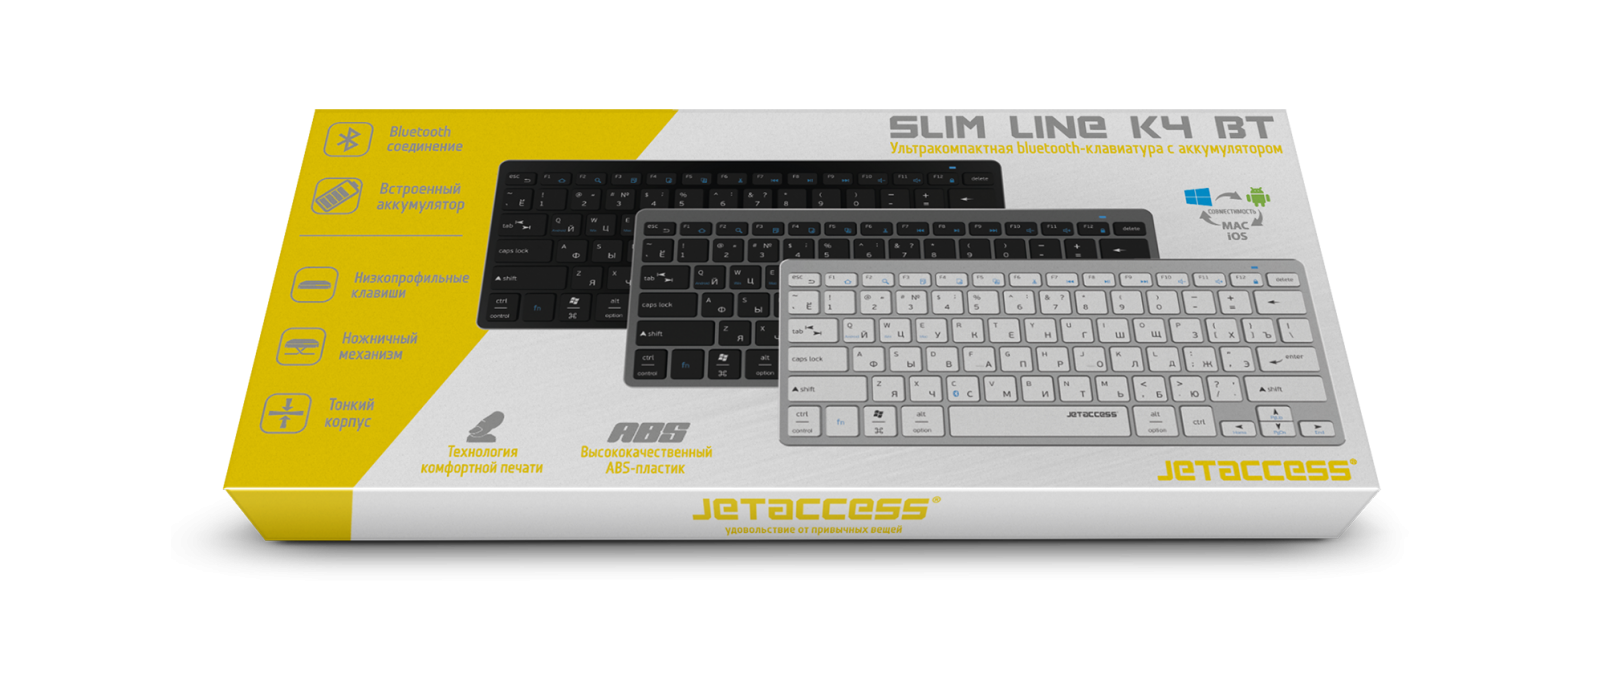 Ультракомпактная bluetooth-клавиатура с аккумулятором SLIM LINE K4 BT7